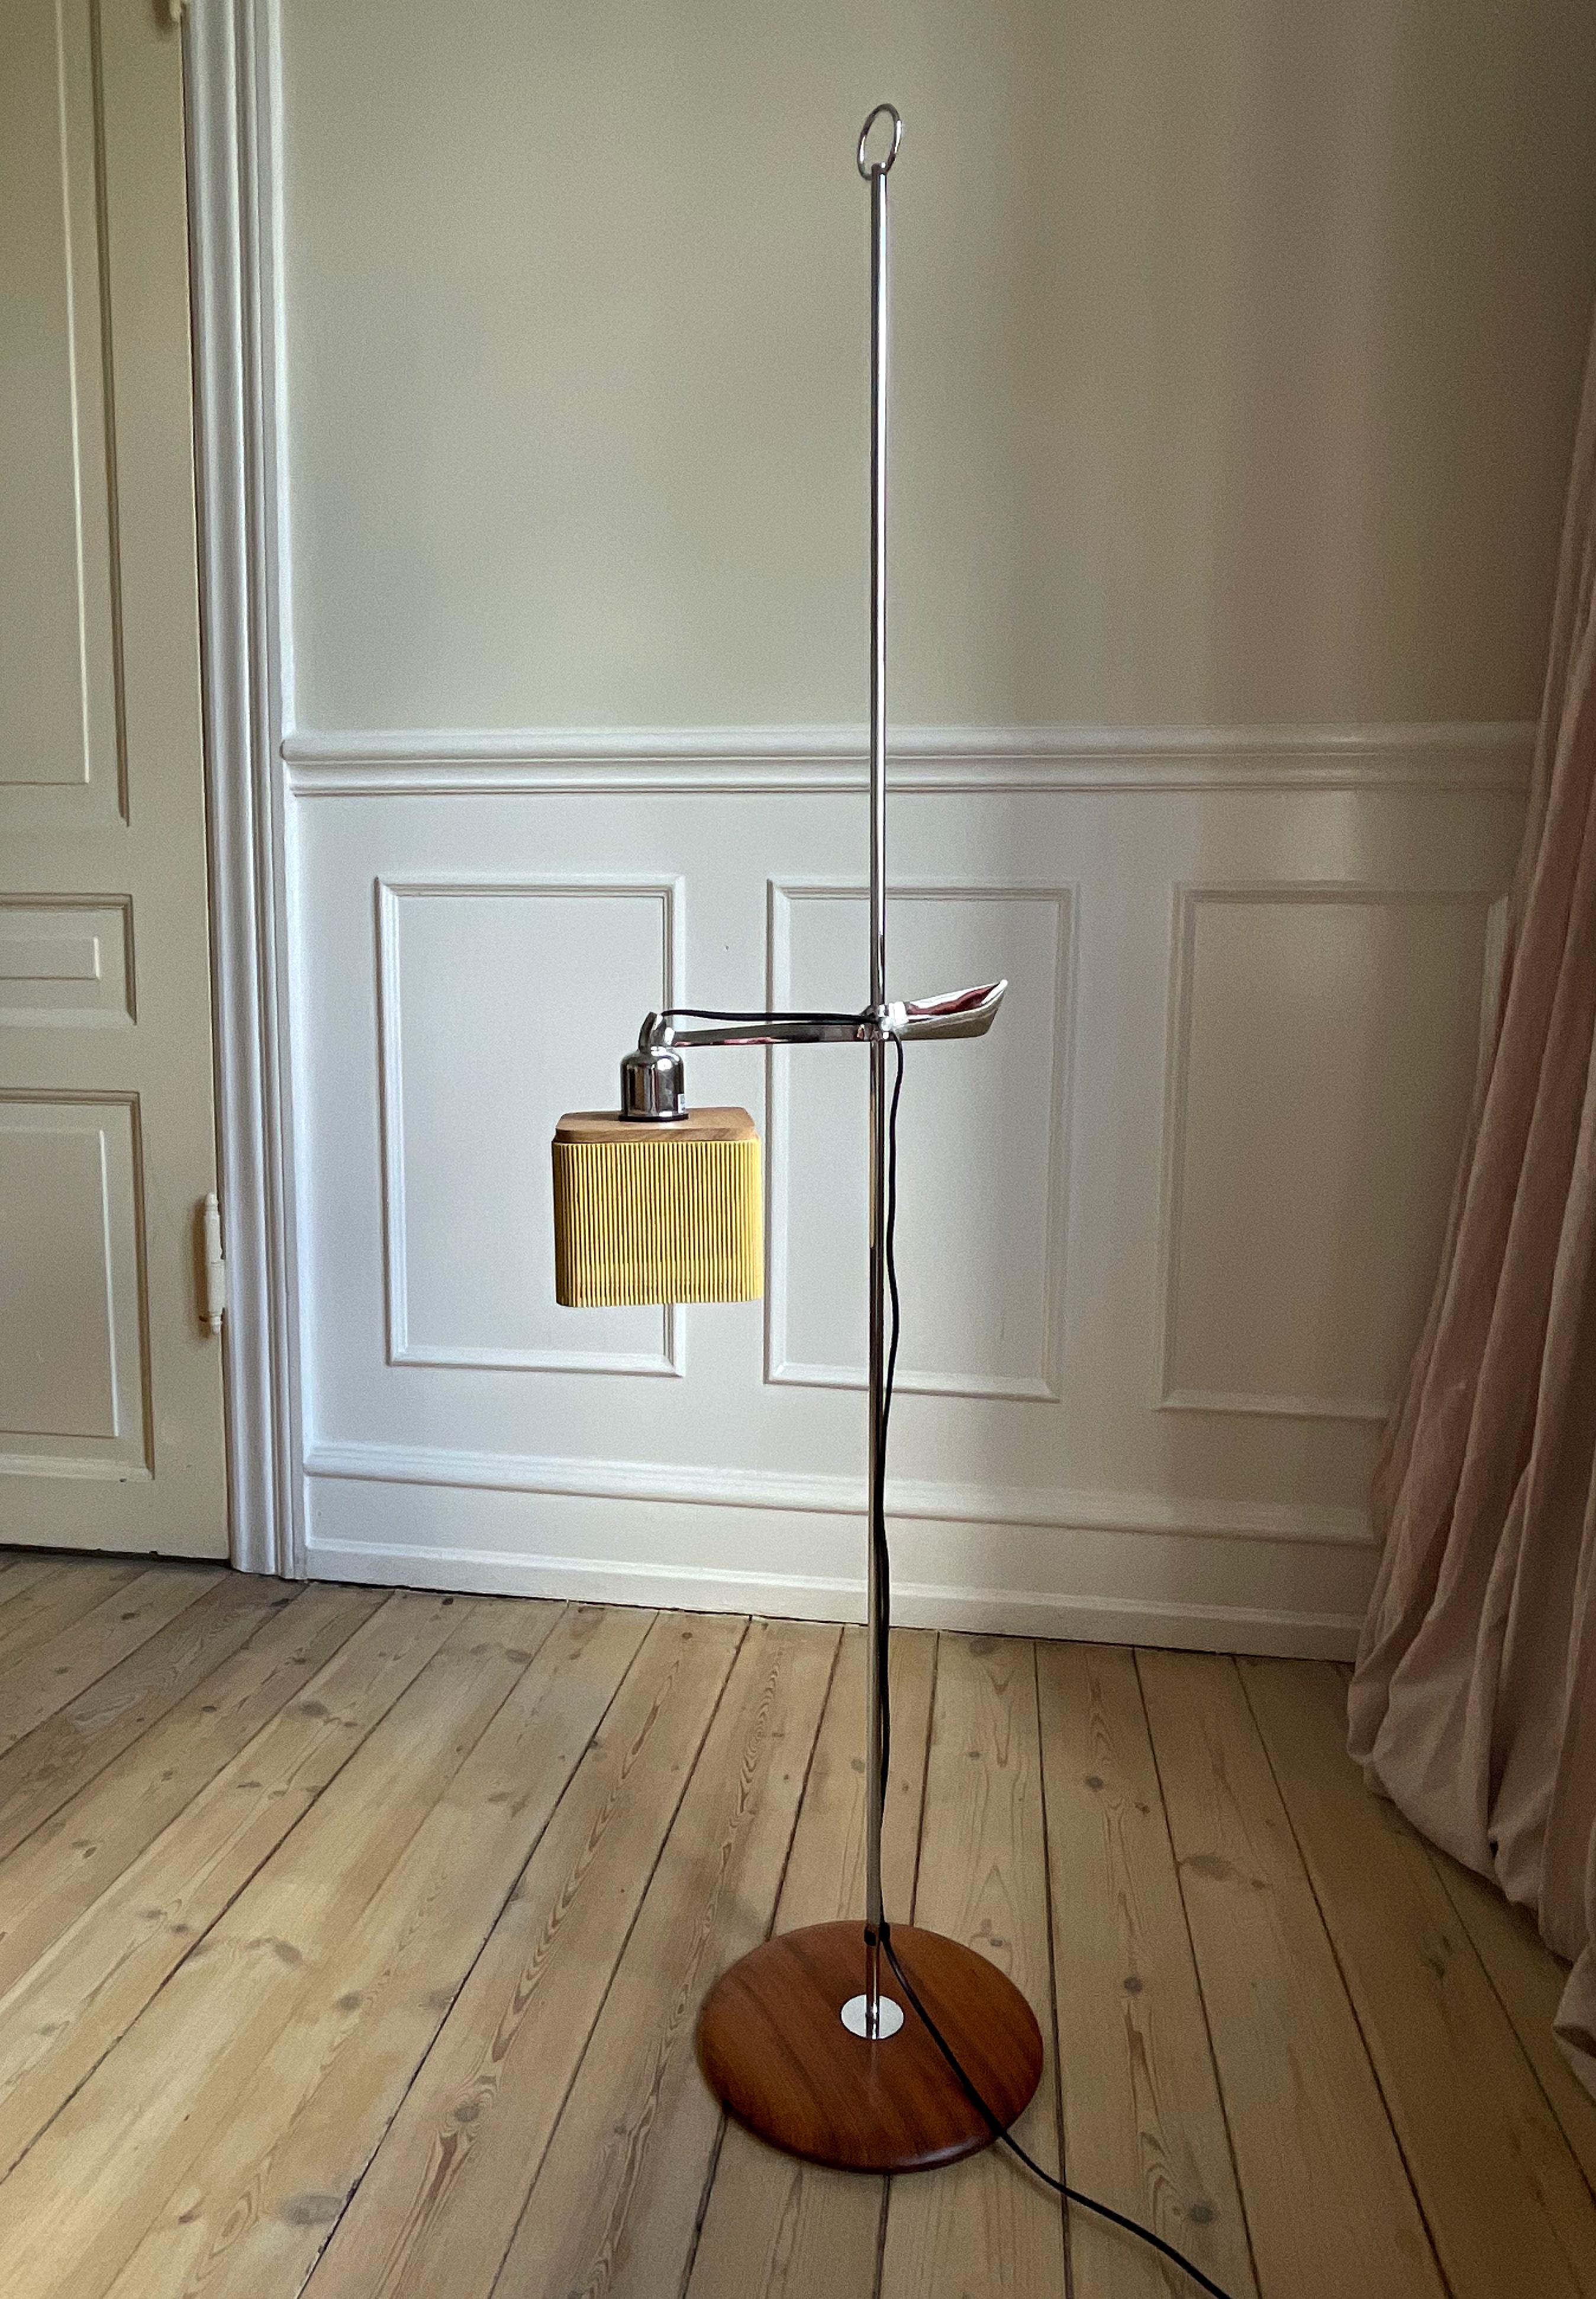 Adjustable Spanish Modernist Floor Lamp, Chrome, Wood, Rattan, 2010s For Sale 8